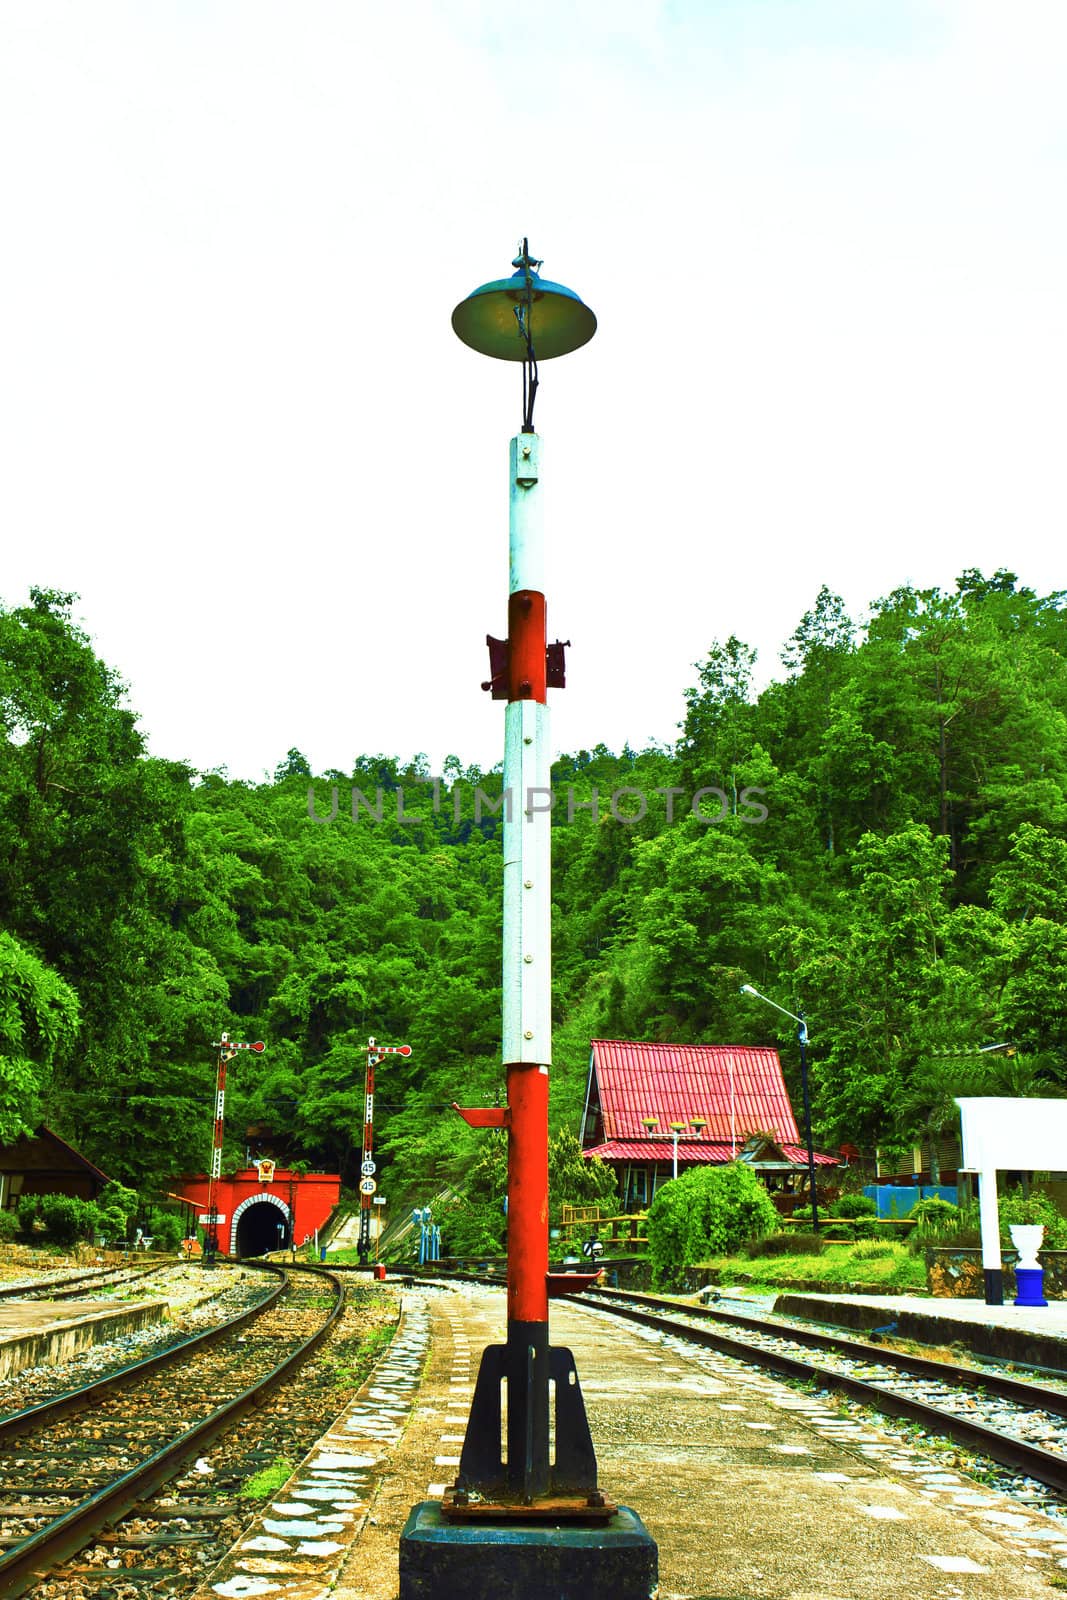 Pole lamp light for train station